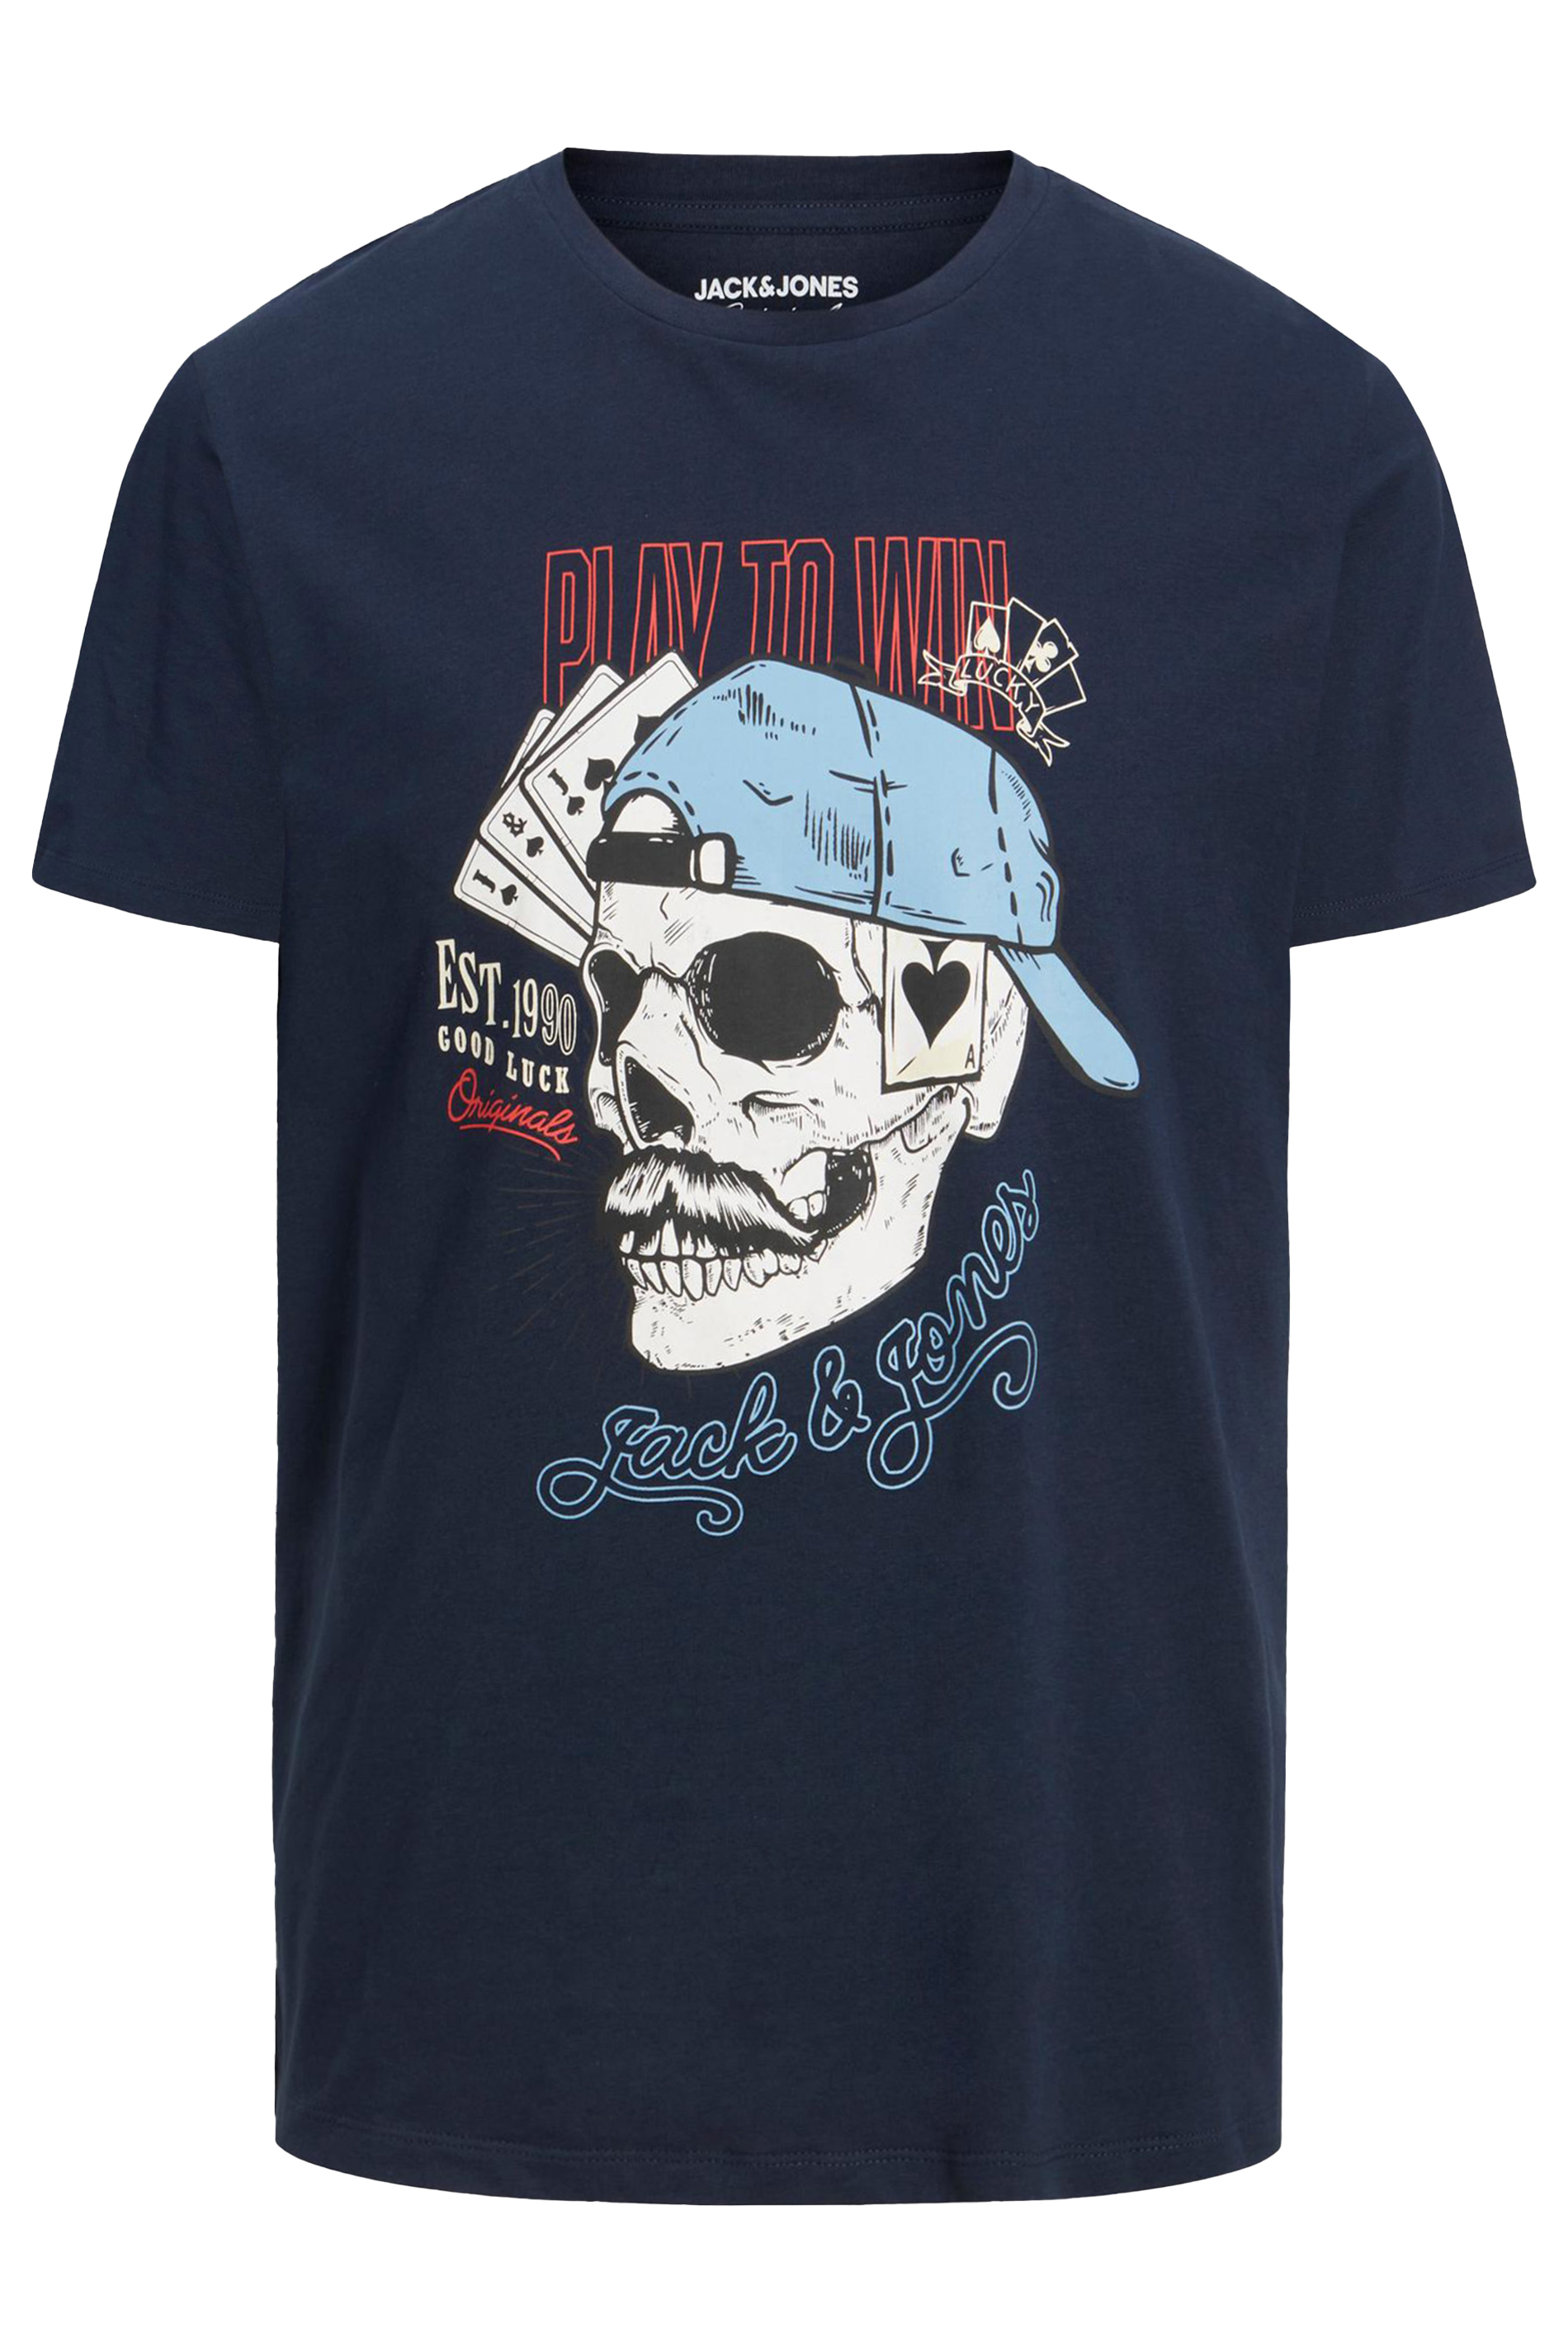 JACK & JONES Big & Tall Navy Blue Skeleton Print T-Shirt | BadRhino 2